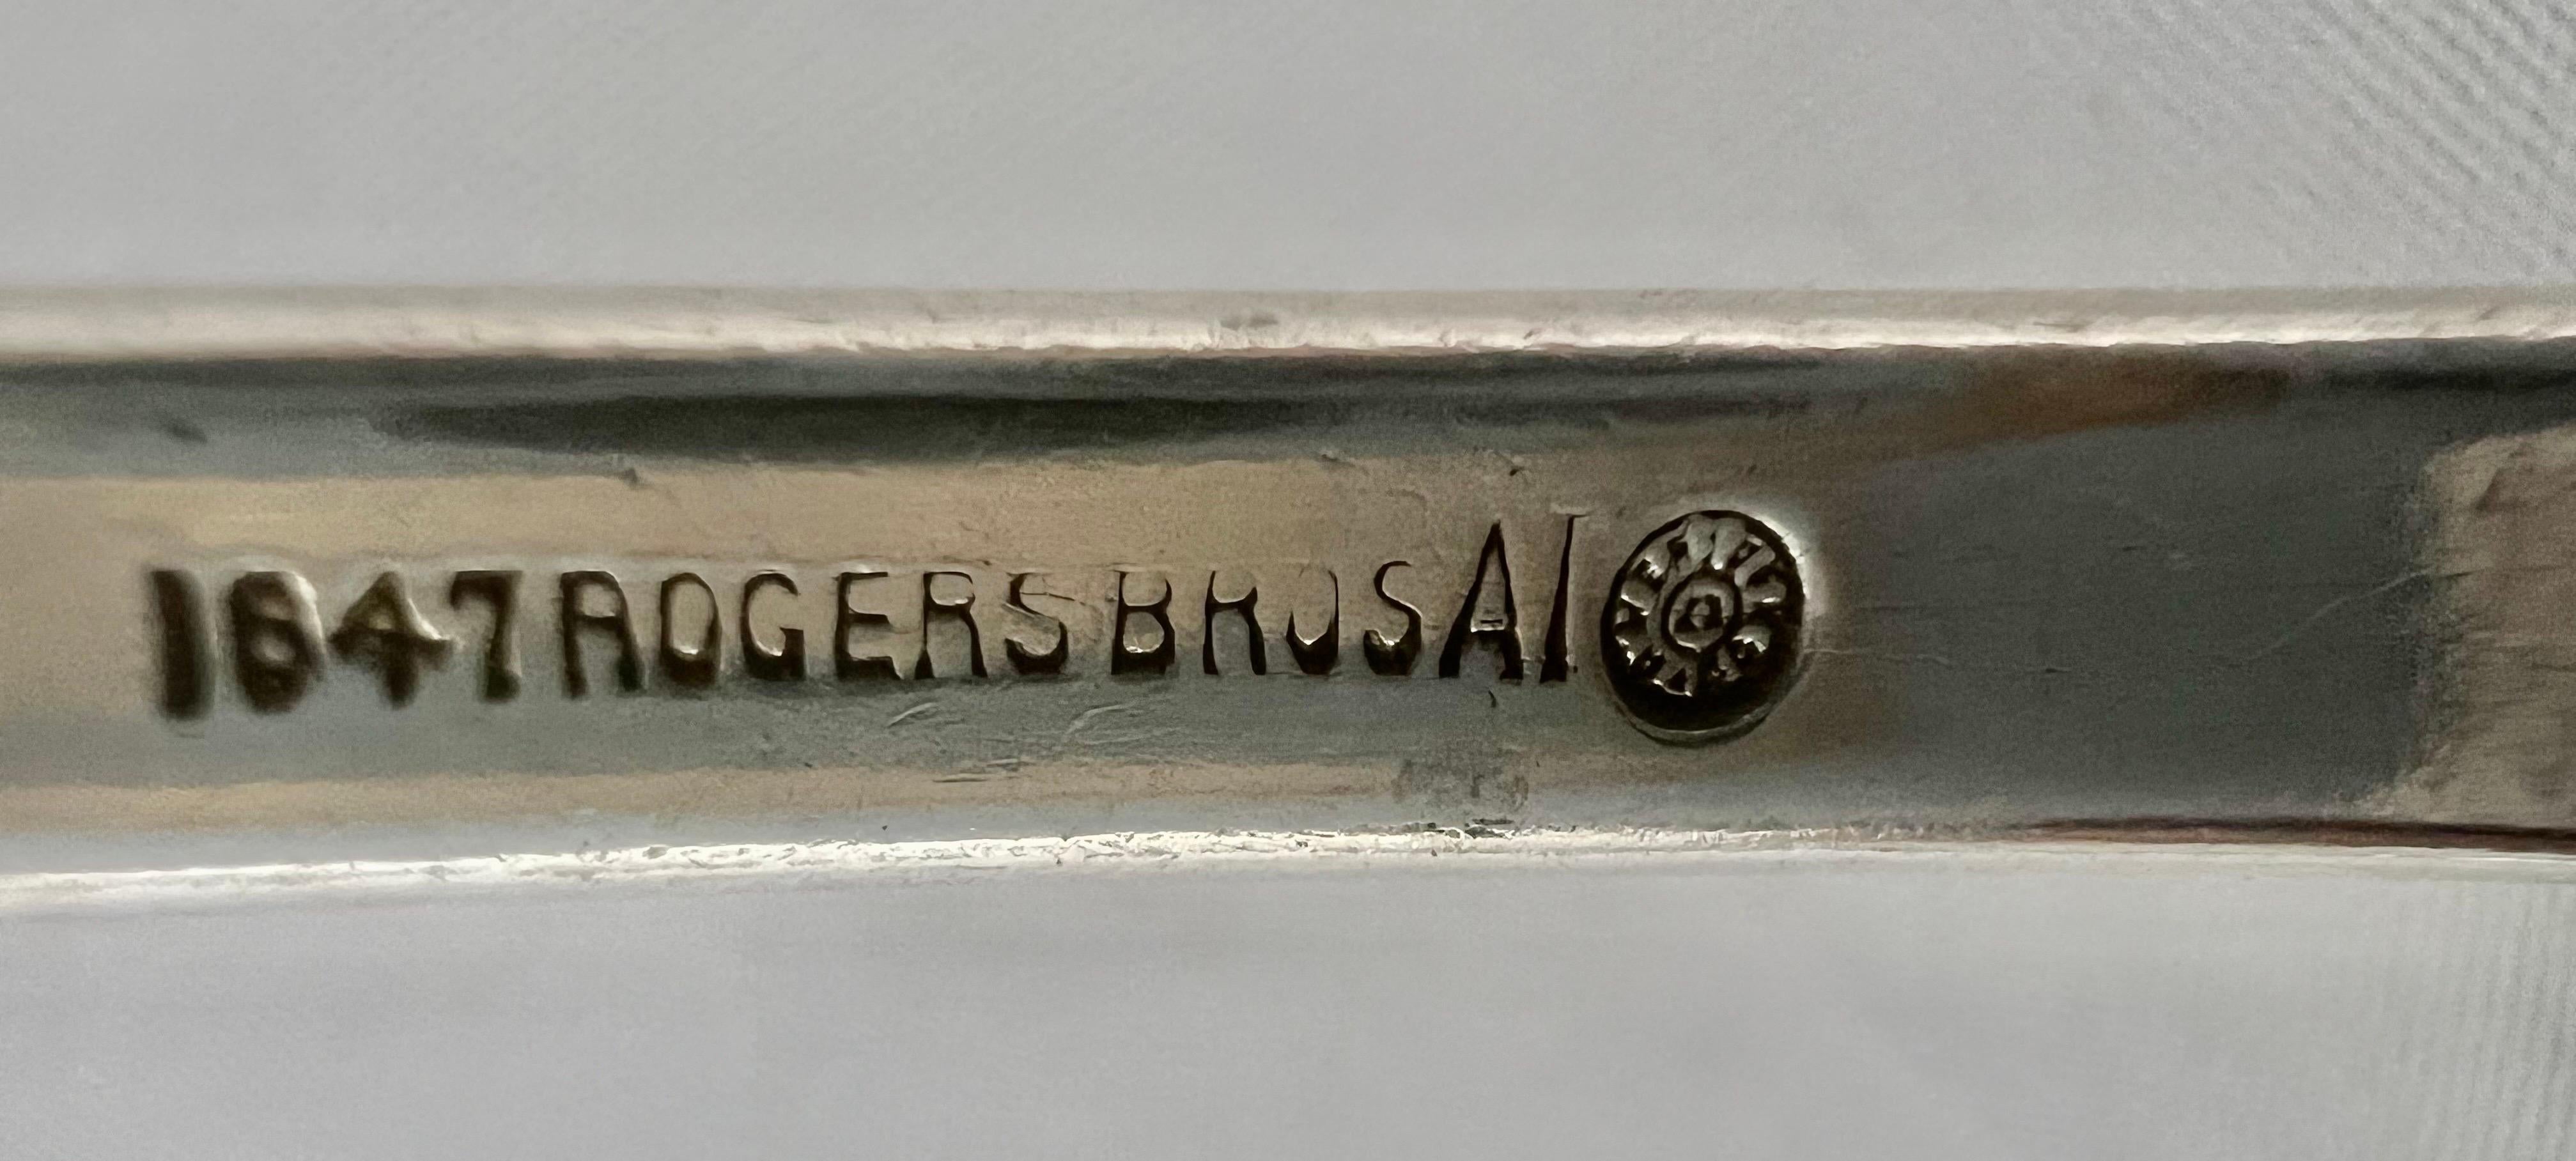 1847 rogers bros spoon value